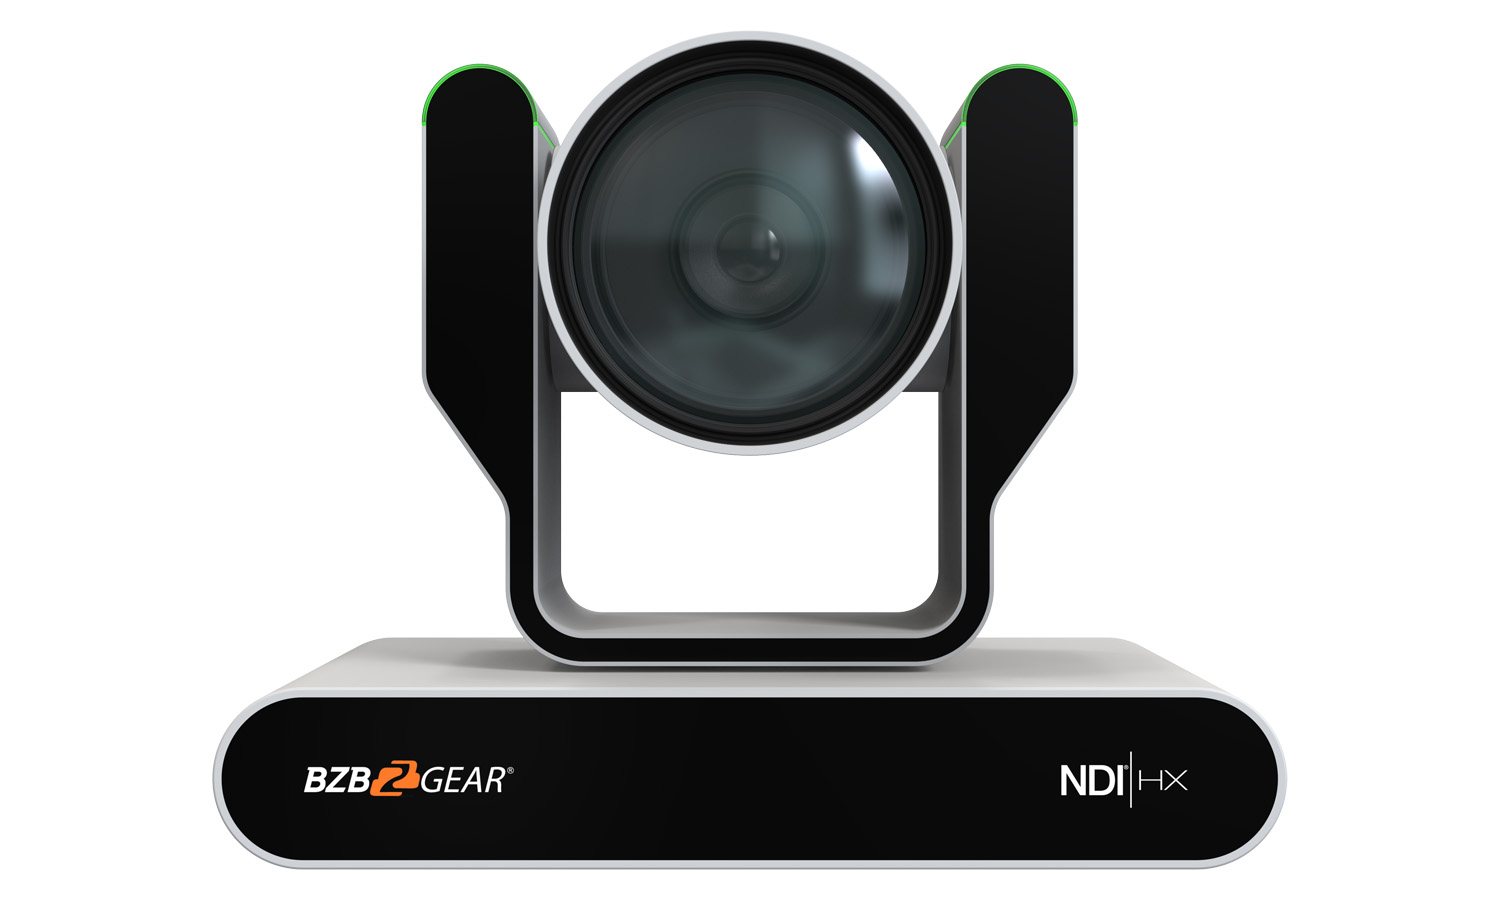 BG-ADAMO-4KND12X-W 12X 4K UHD AUTO TRACKING HDMI 2.0/12G-SDI/USB 2.0/USB 3.0/POE/NDI|HX3 Live Streaming PTZ Camera with Tally Lights (White) by BZBGEAR